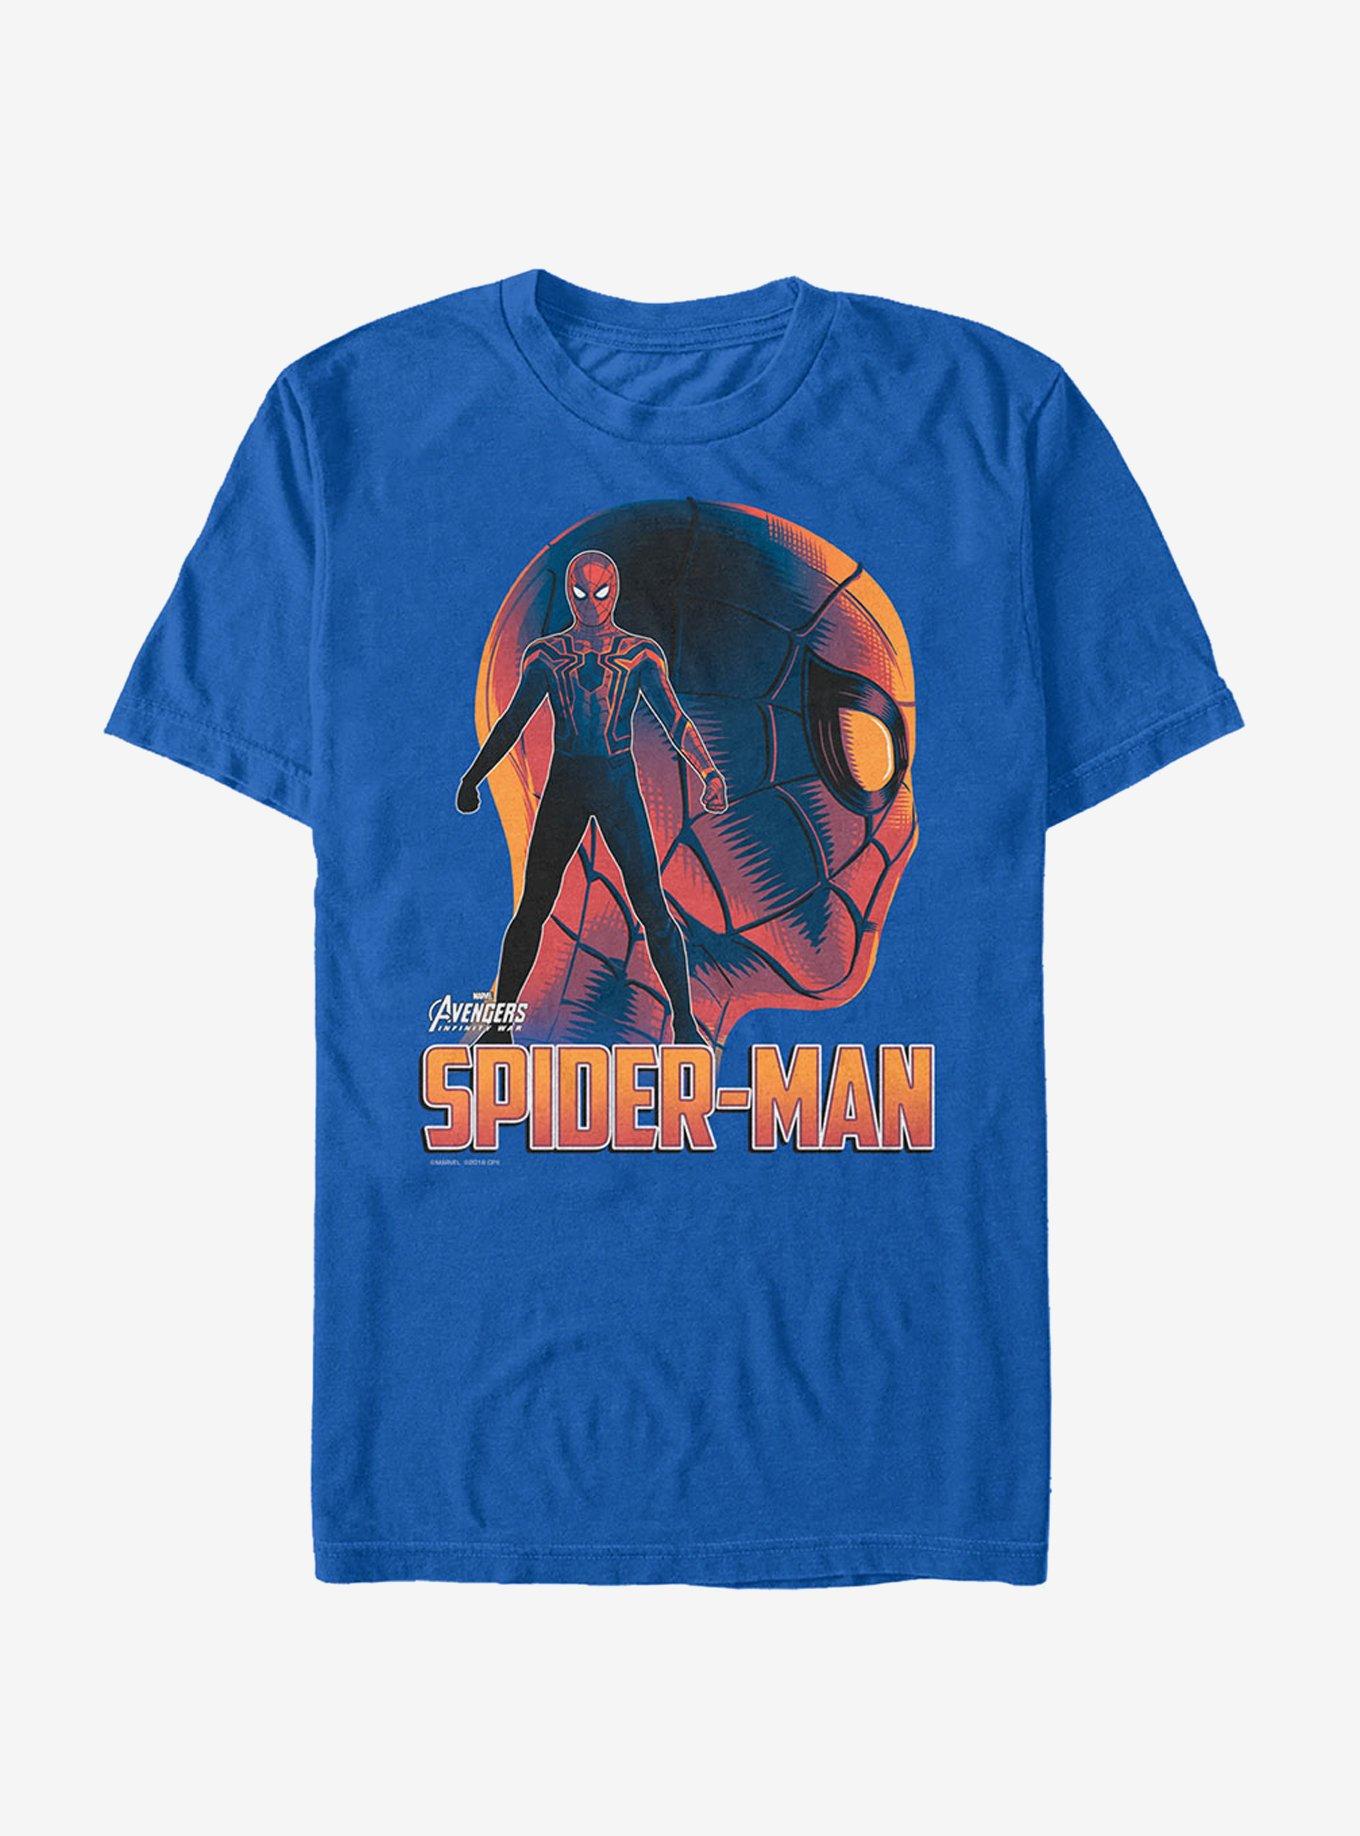 Marvel Avengers: Infinity War Spider-Man View T-Shirt, ROYAL, hi-res